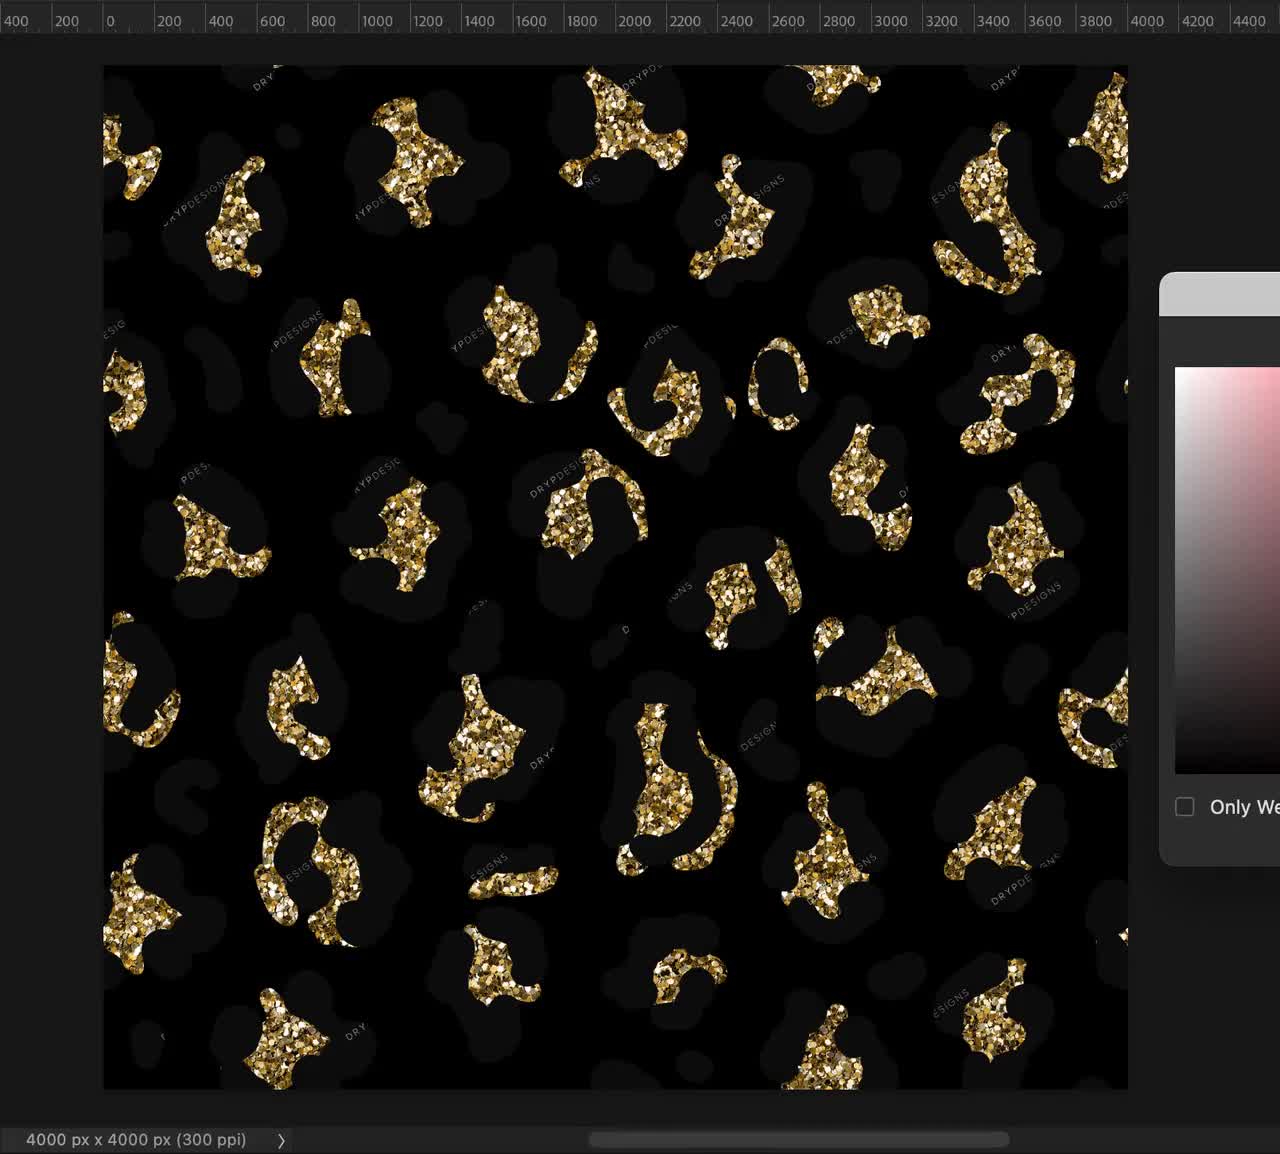 200+] Gold Glitter Backgrounds